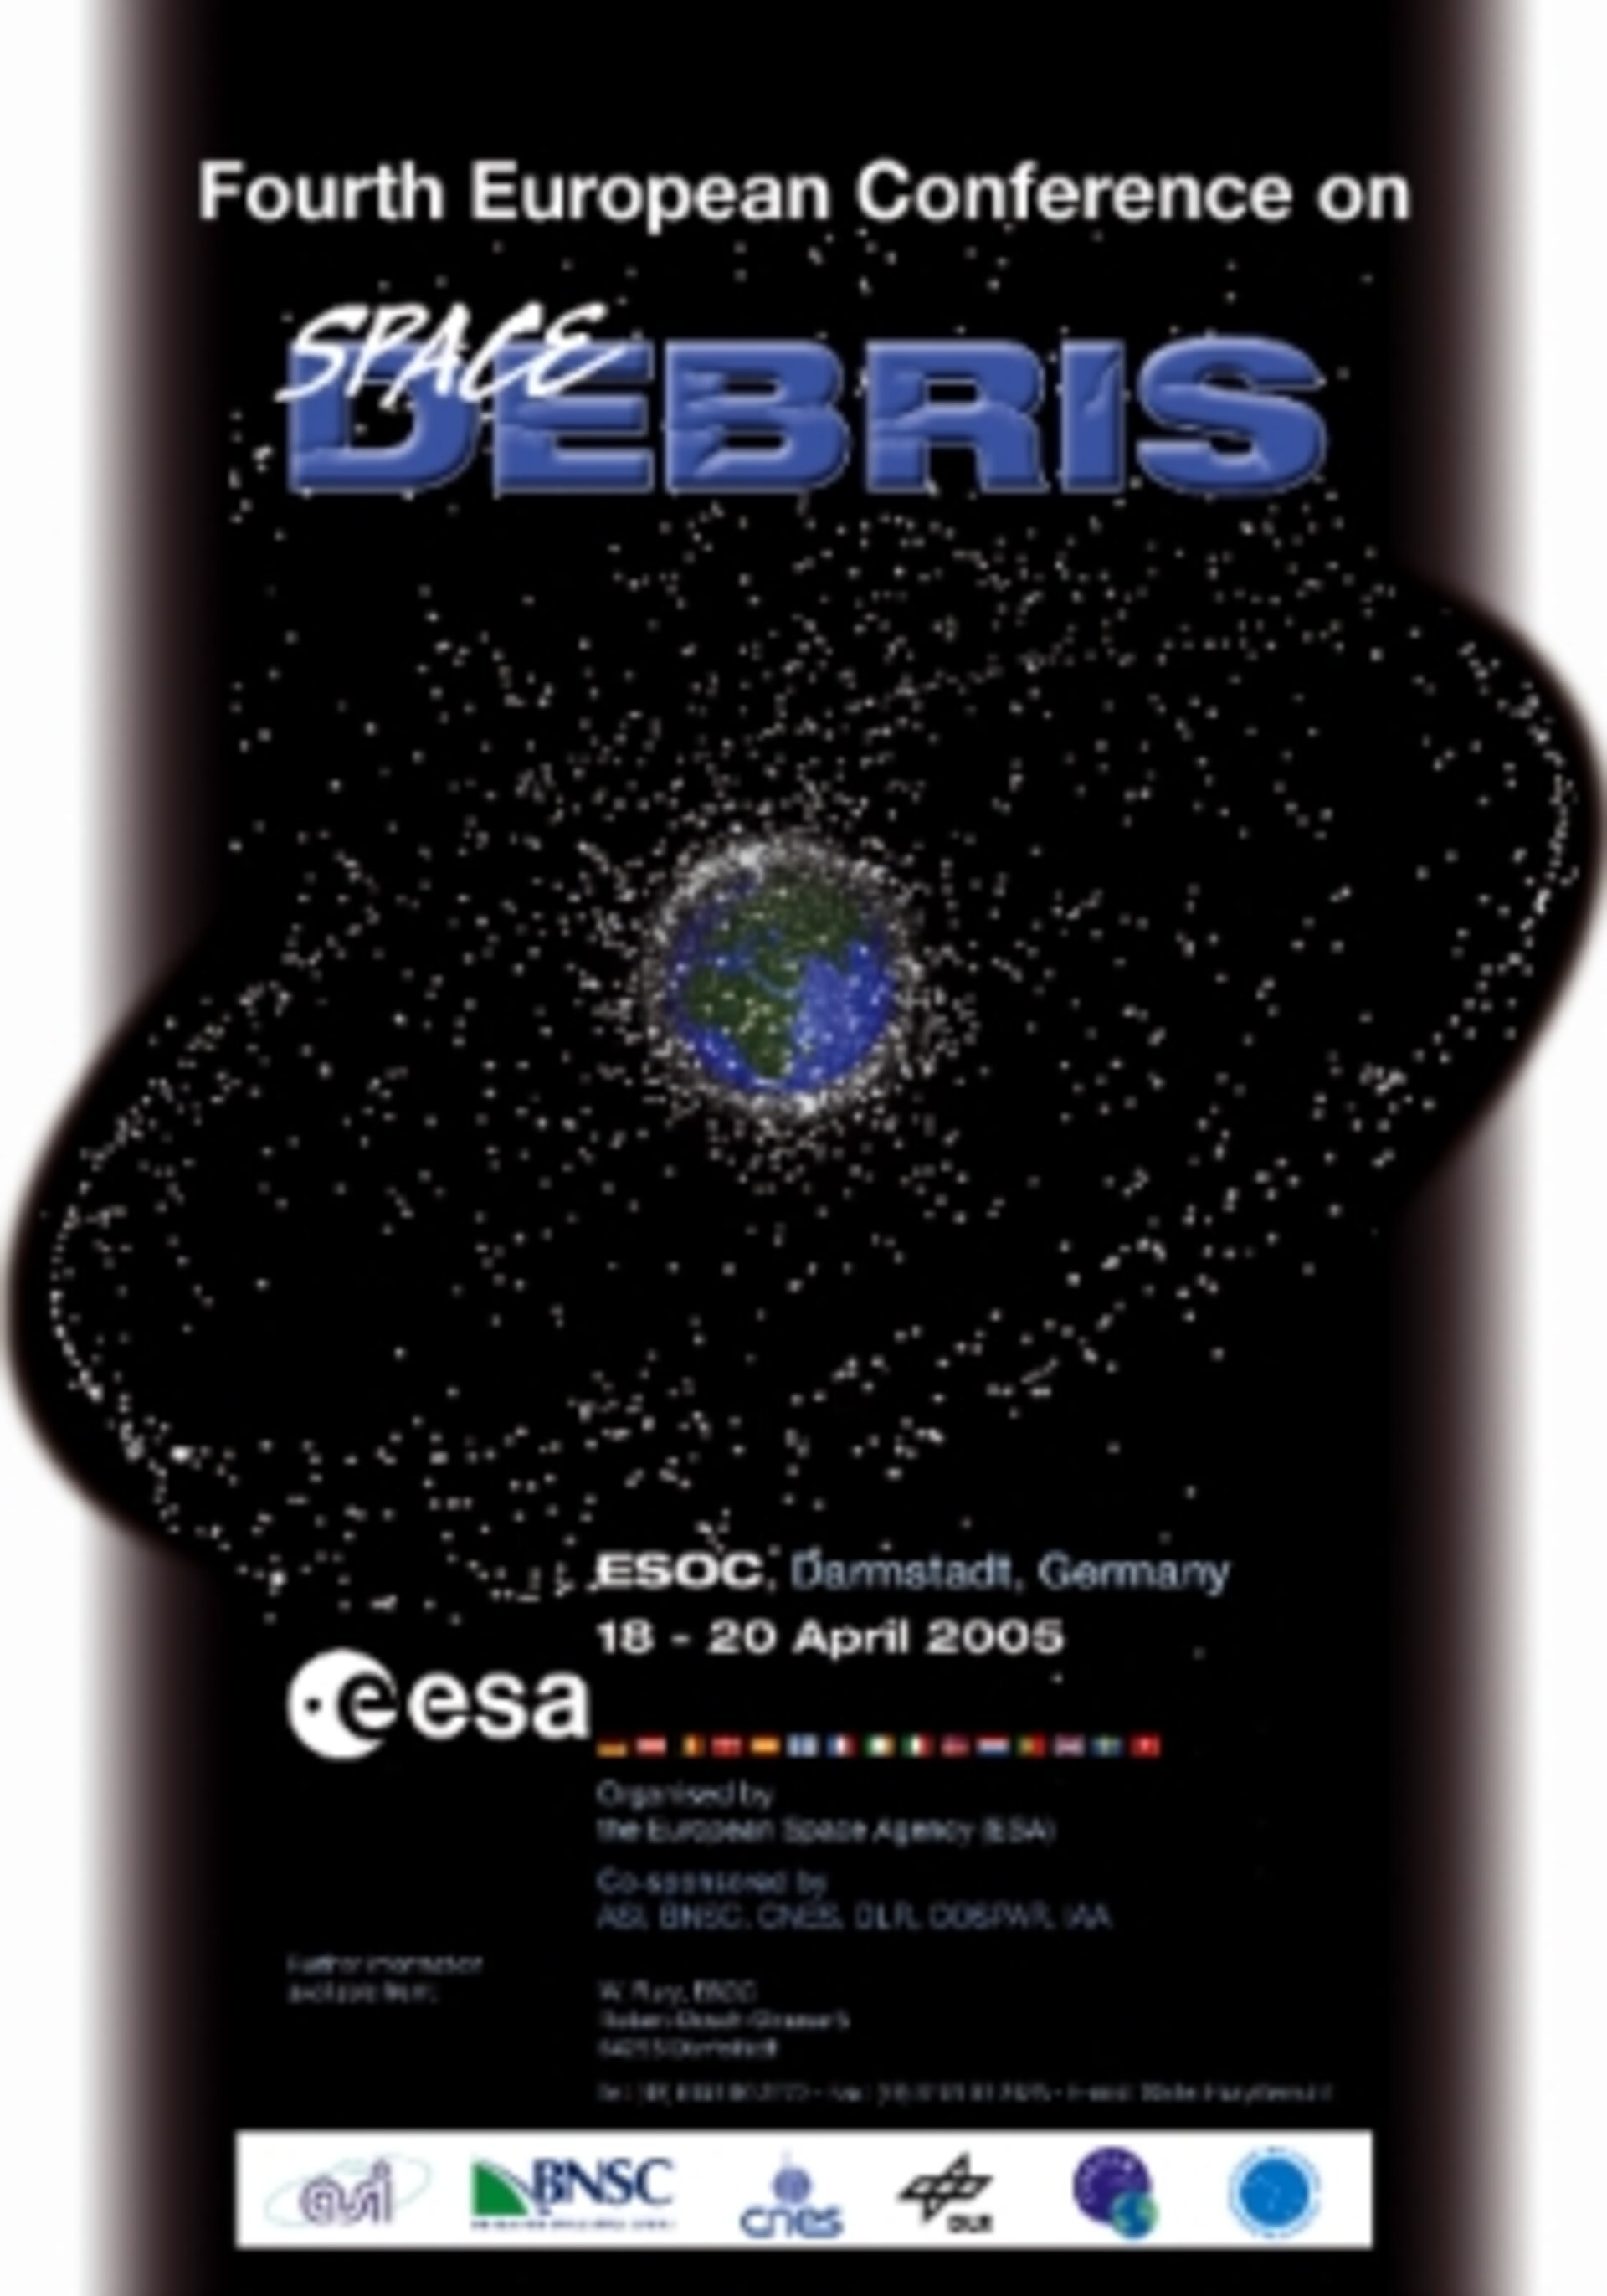 Space debris conference poster